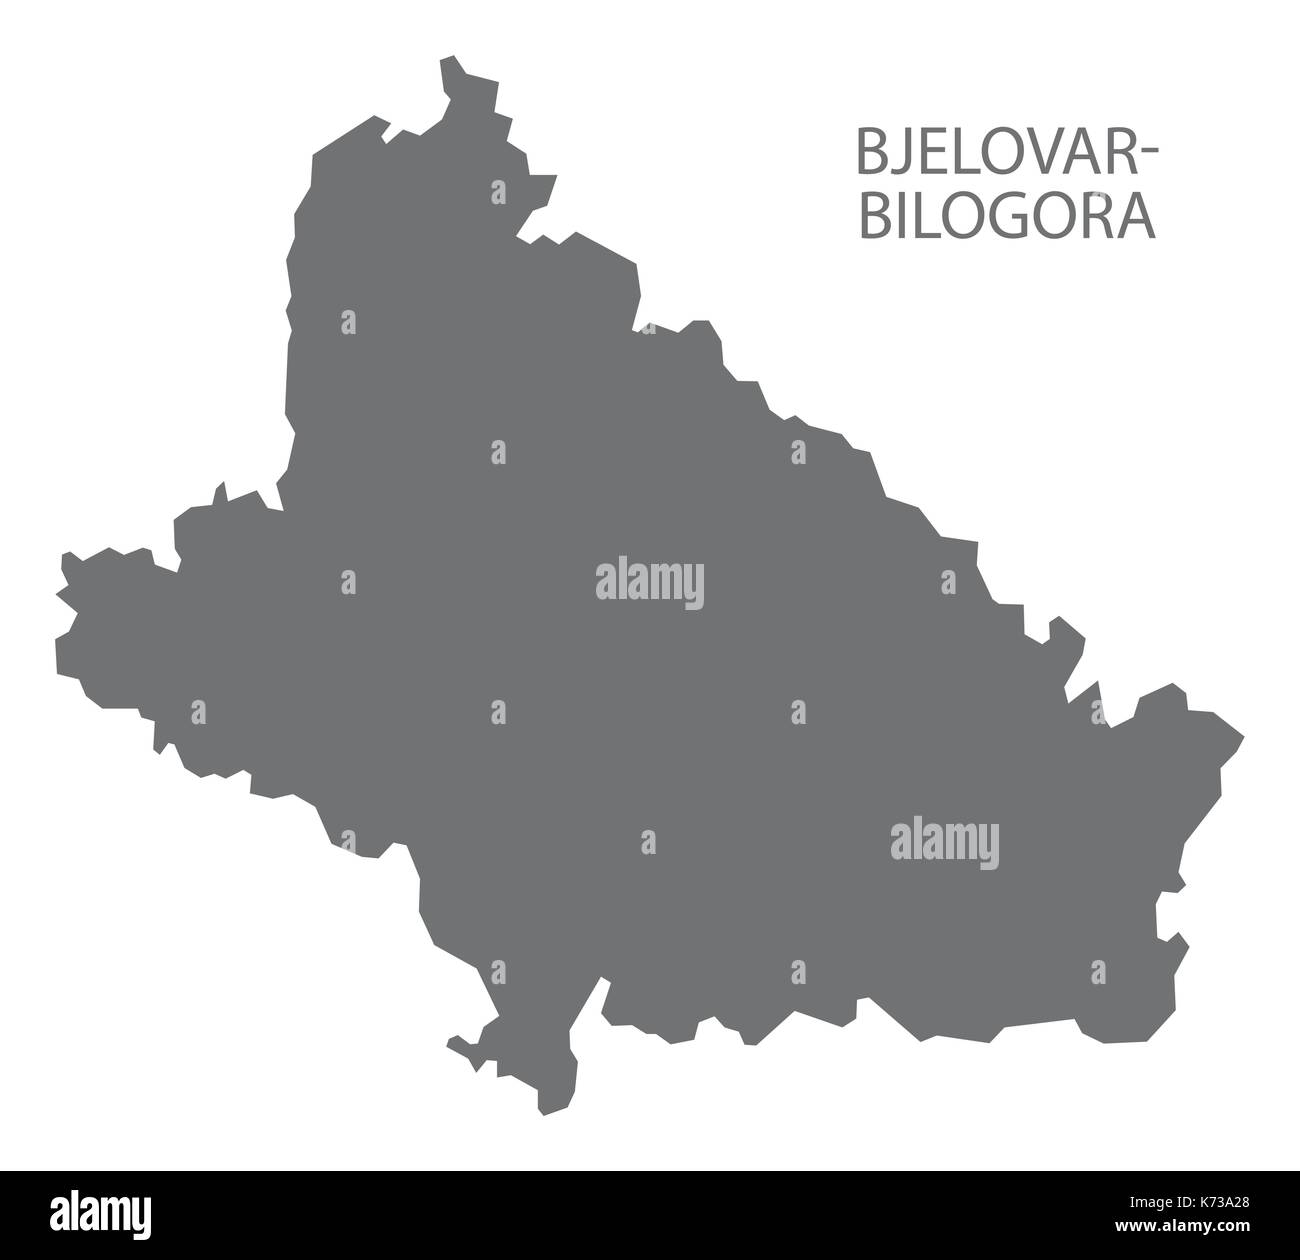 Bjelovar-Bilogora Croatia county map grey illustration silhouette shape Stock Vector